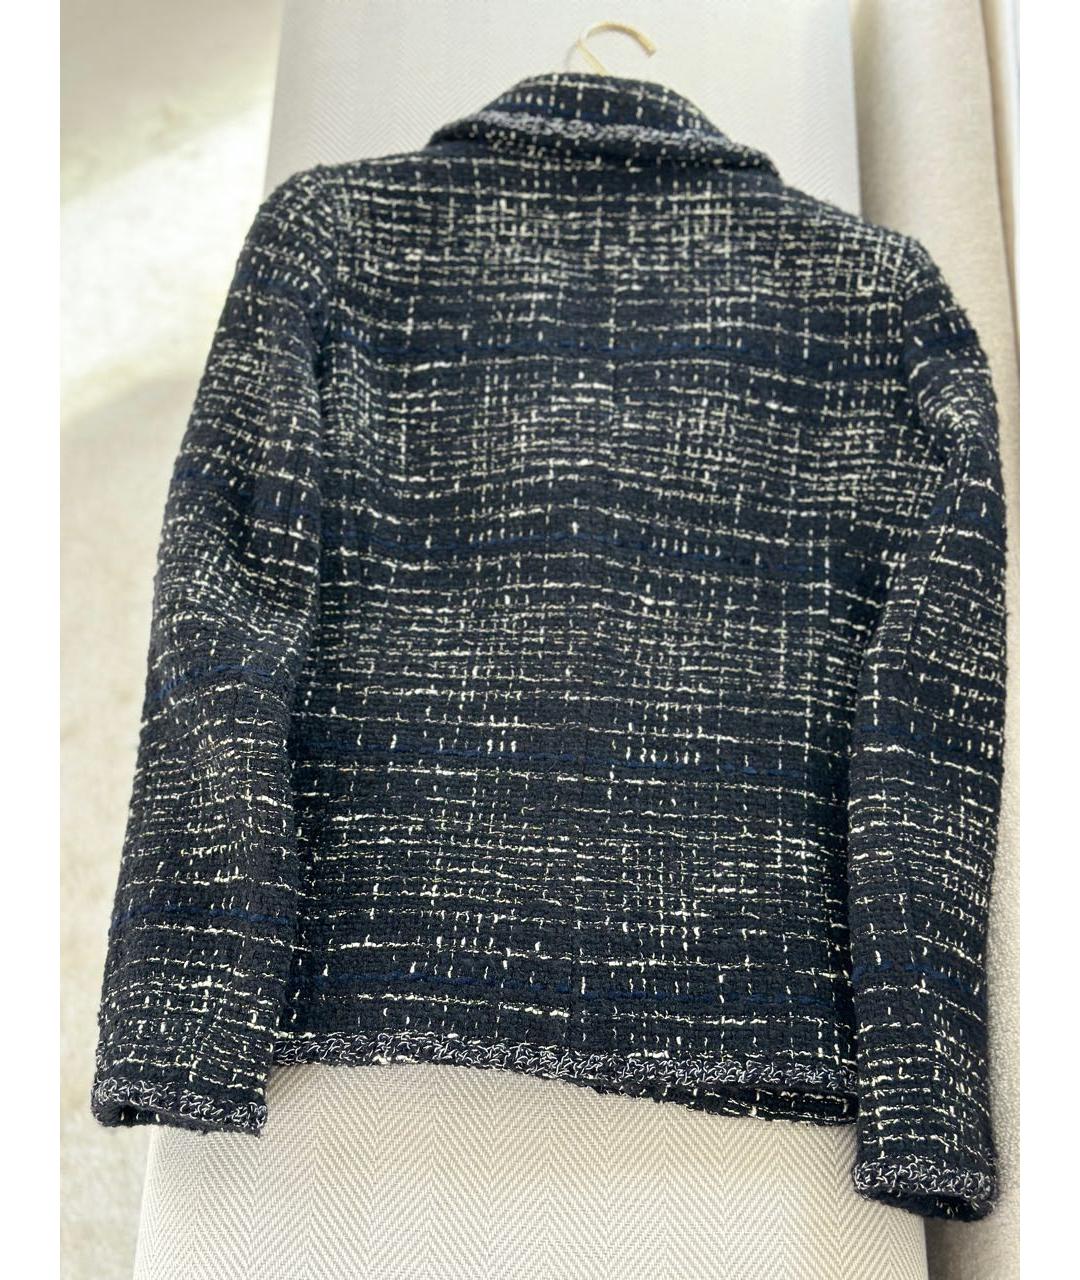 CHANEL PRE-OWNED Темно-синий жакет/пиджак, фото 3